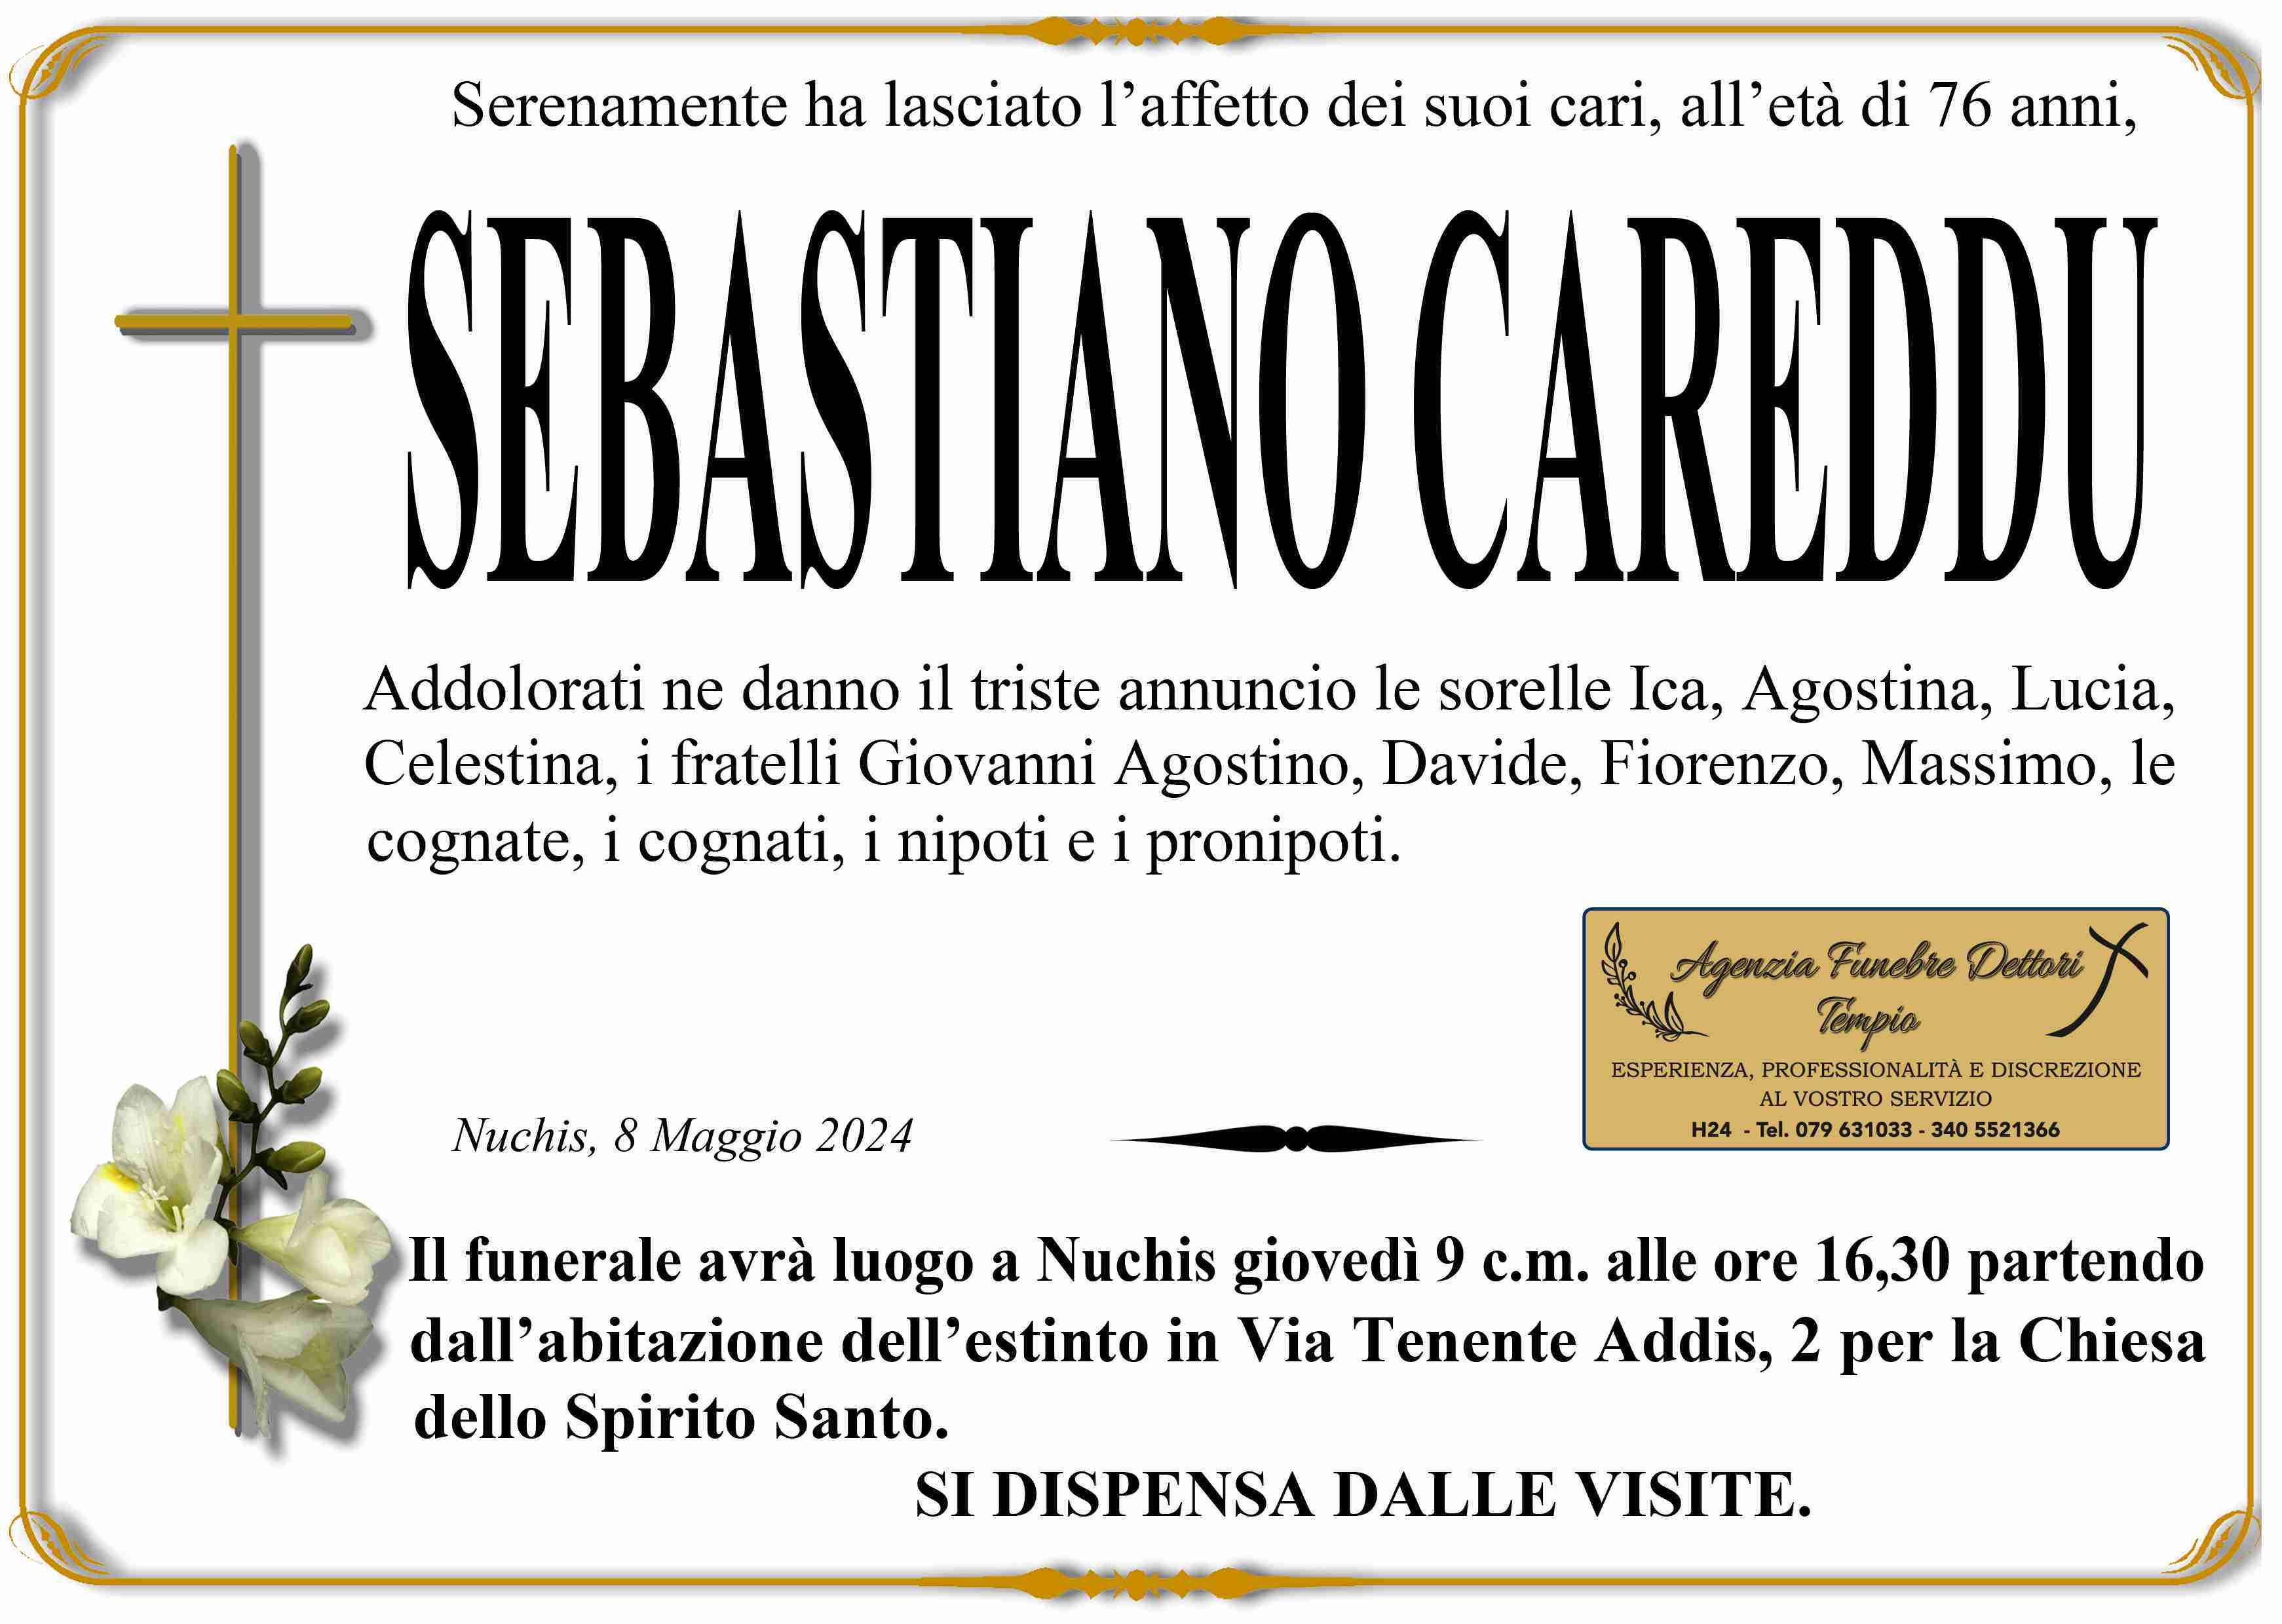 Sebastiano Careddu